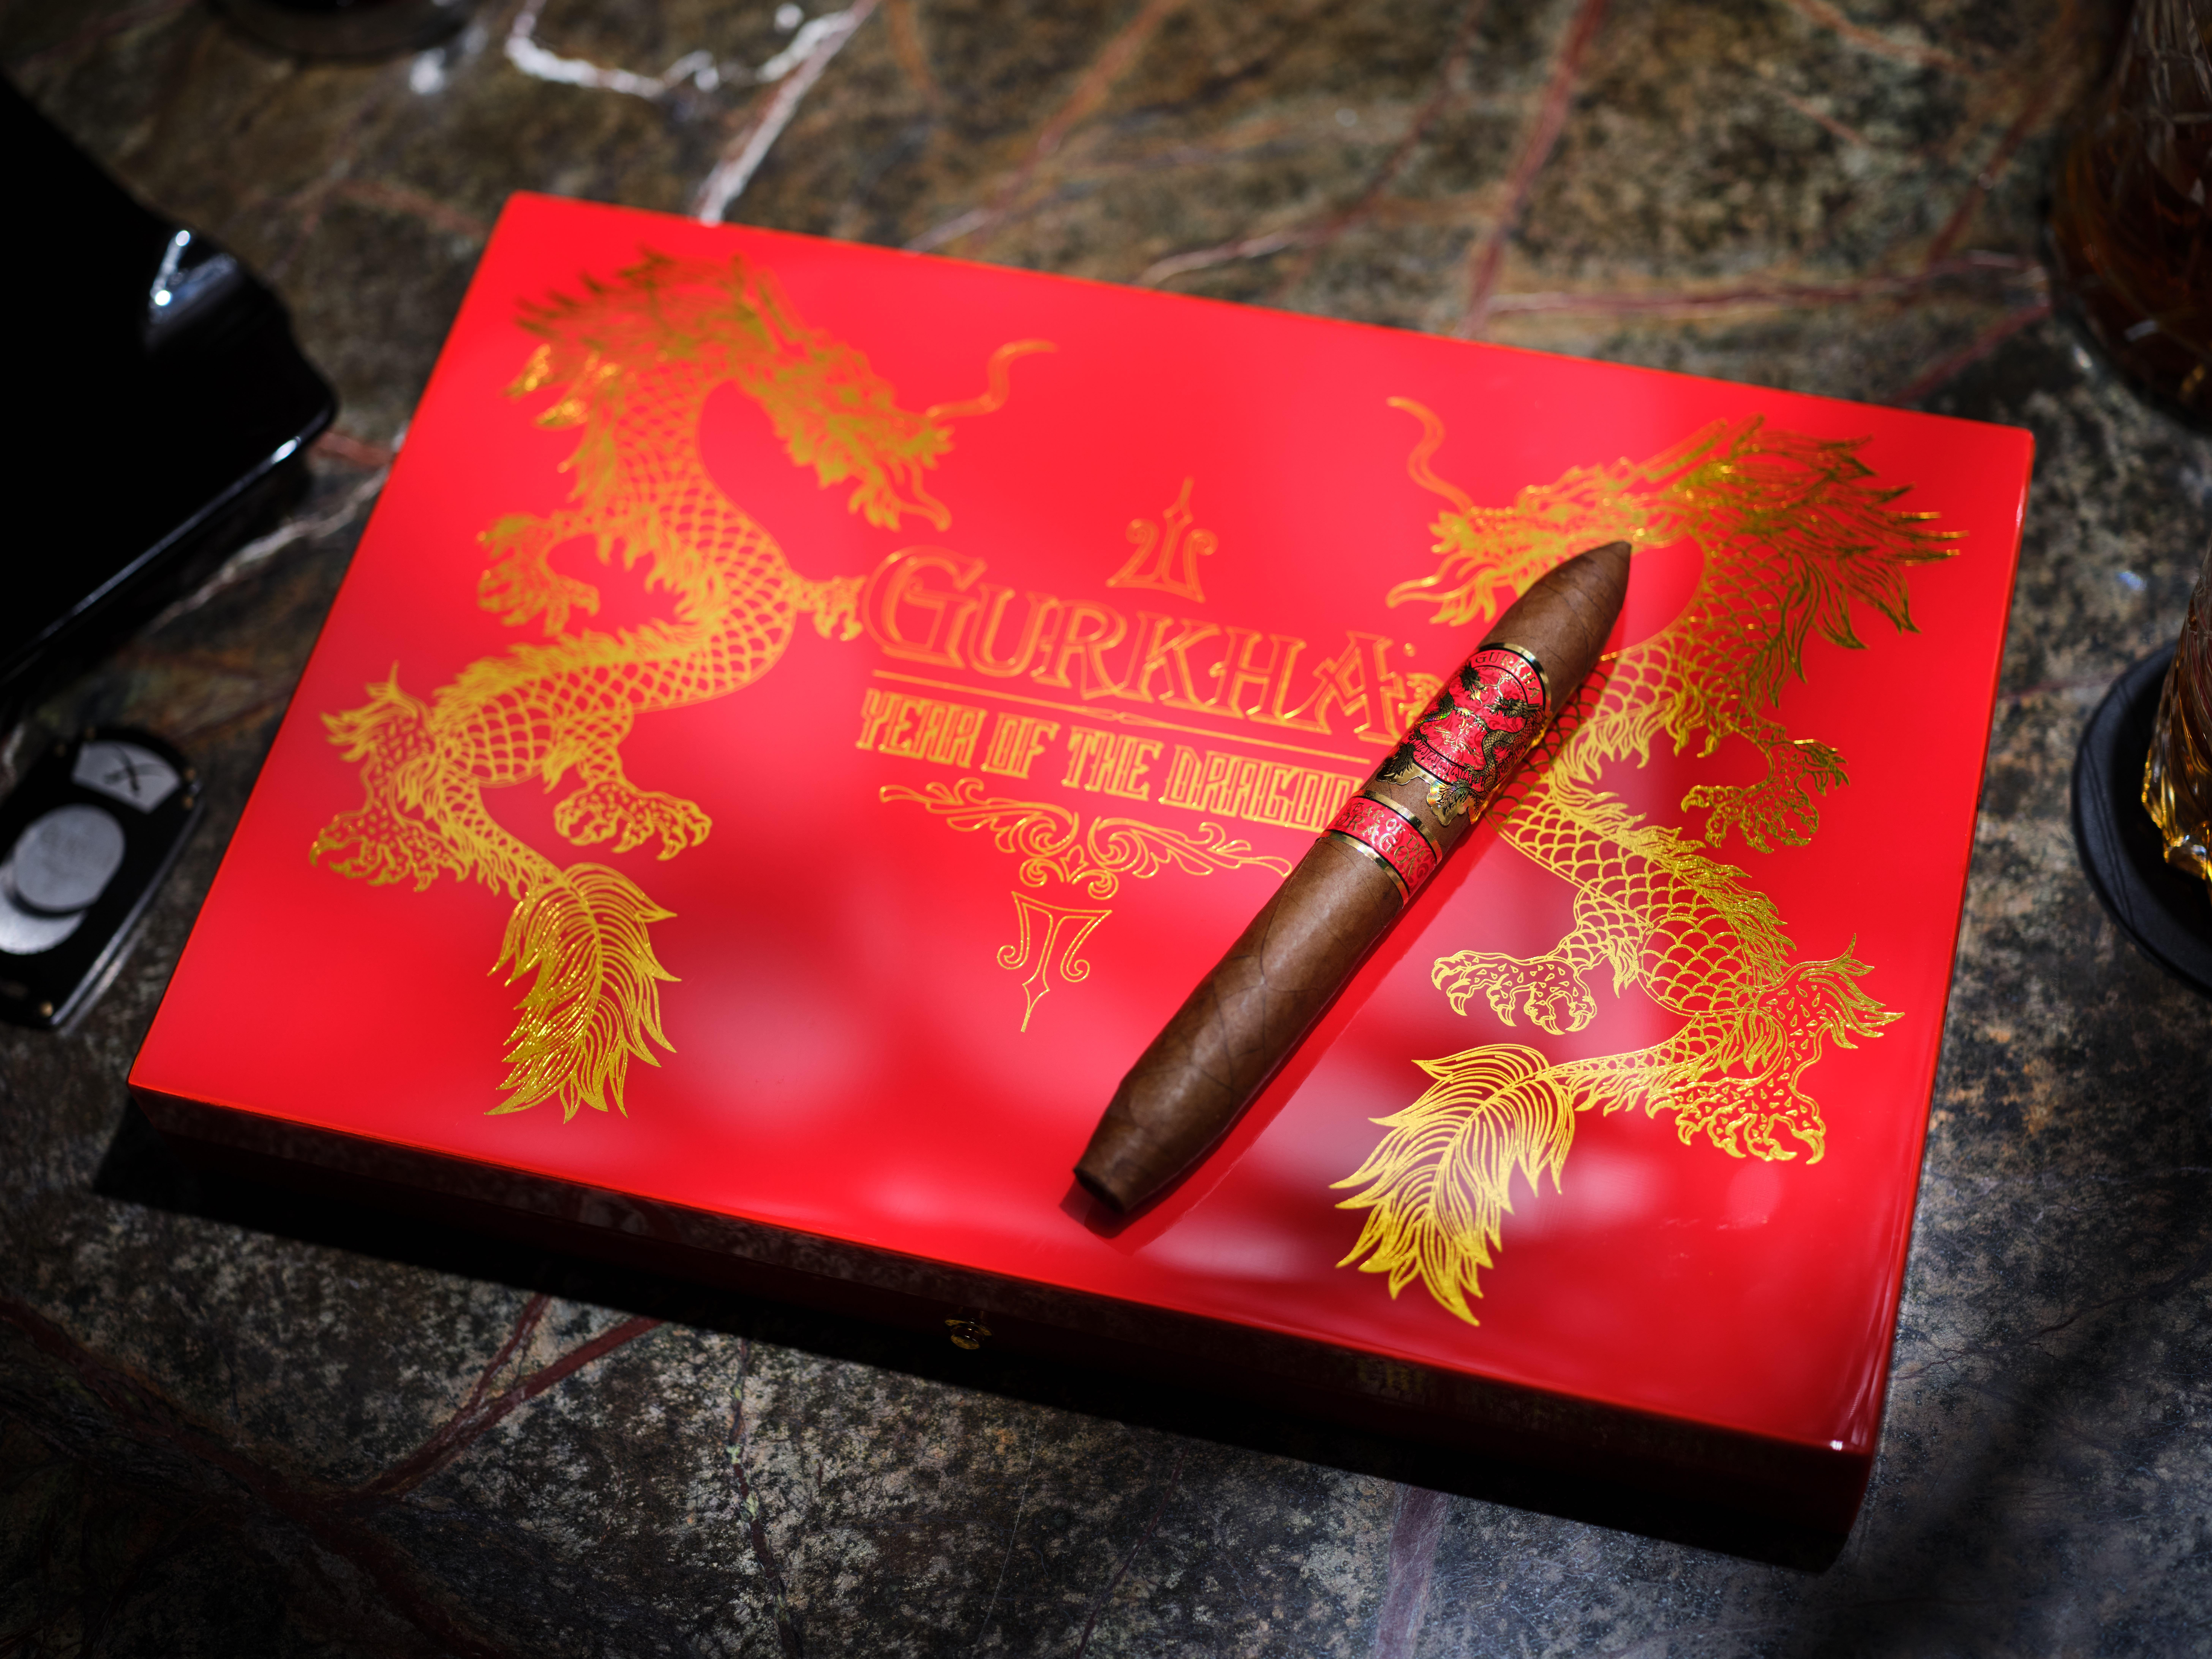 Gurkha Cigar Box of Year of the Dragon Cigars